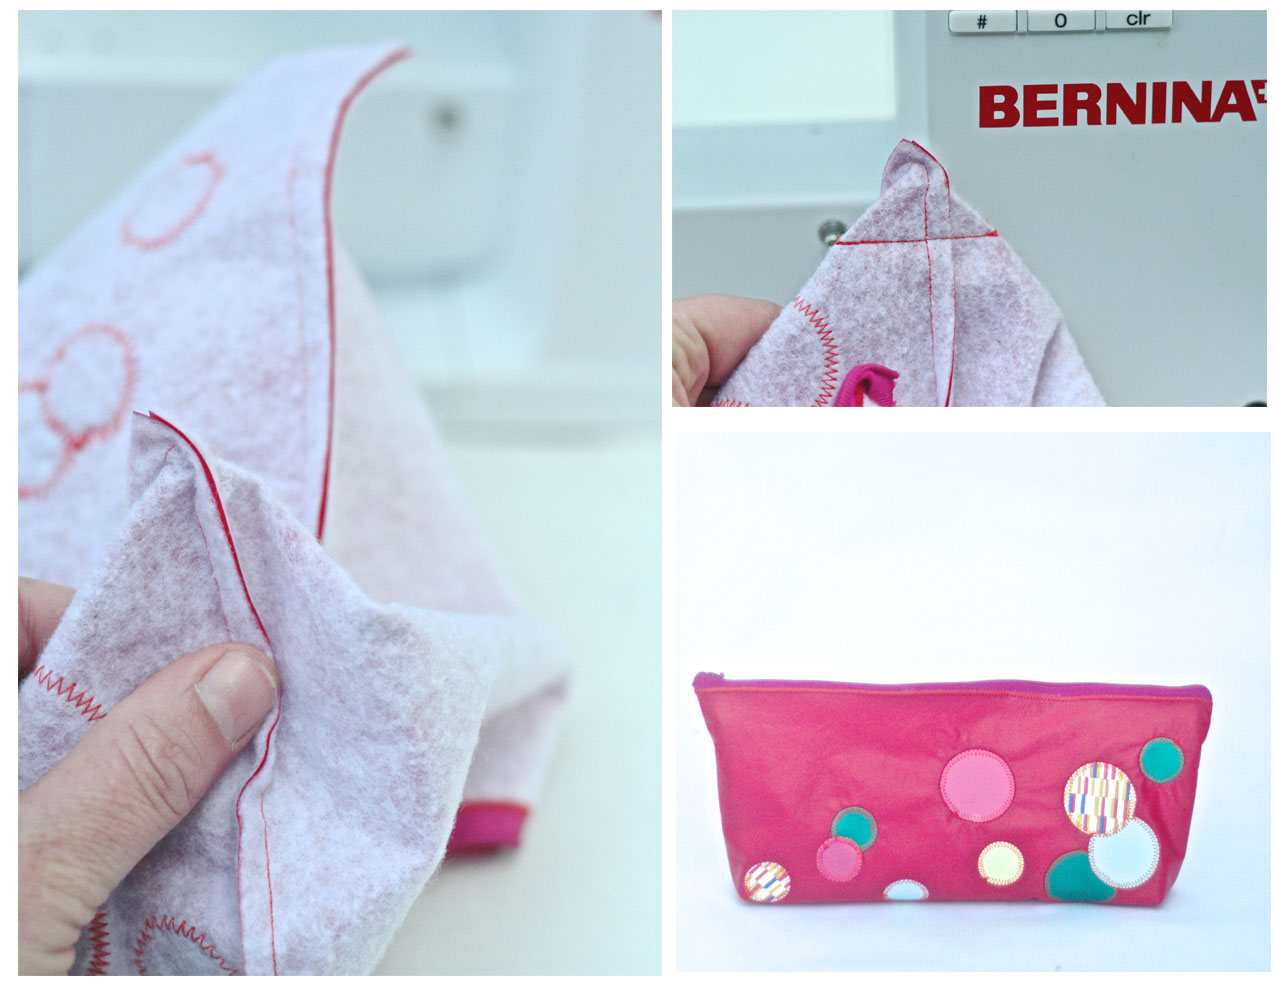 6-how-to-sew-make-craft-diy-vinyl-cosmetic-make-up-bag-sizzix-bernina